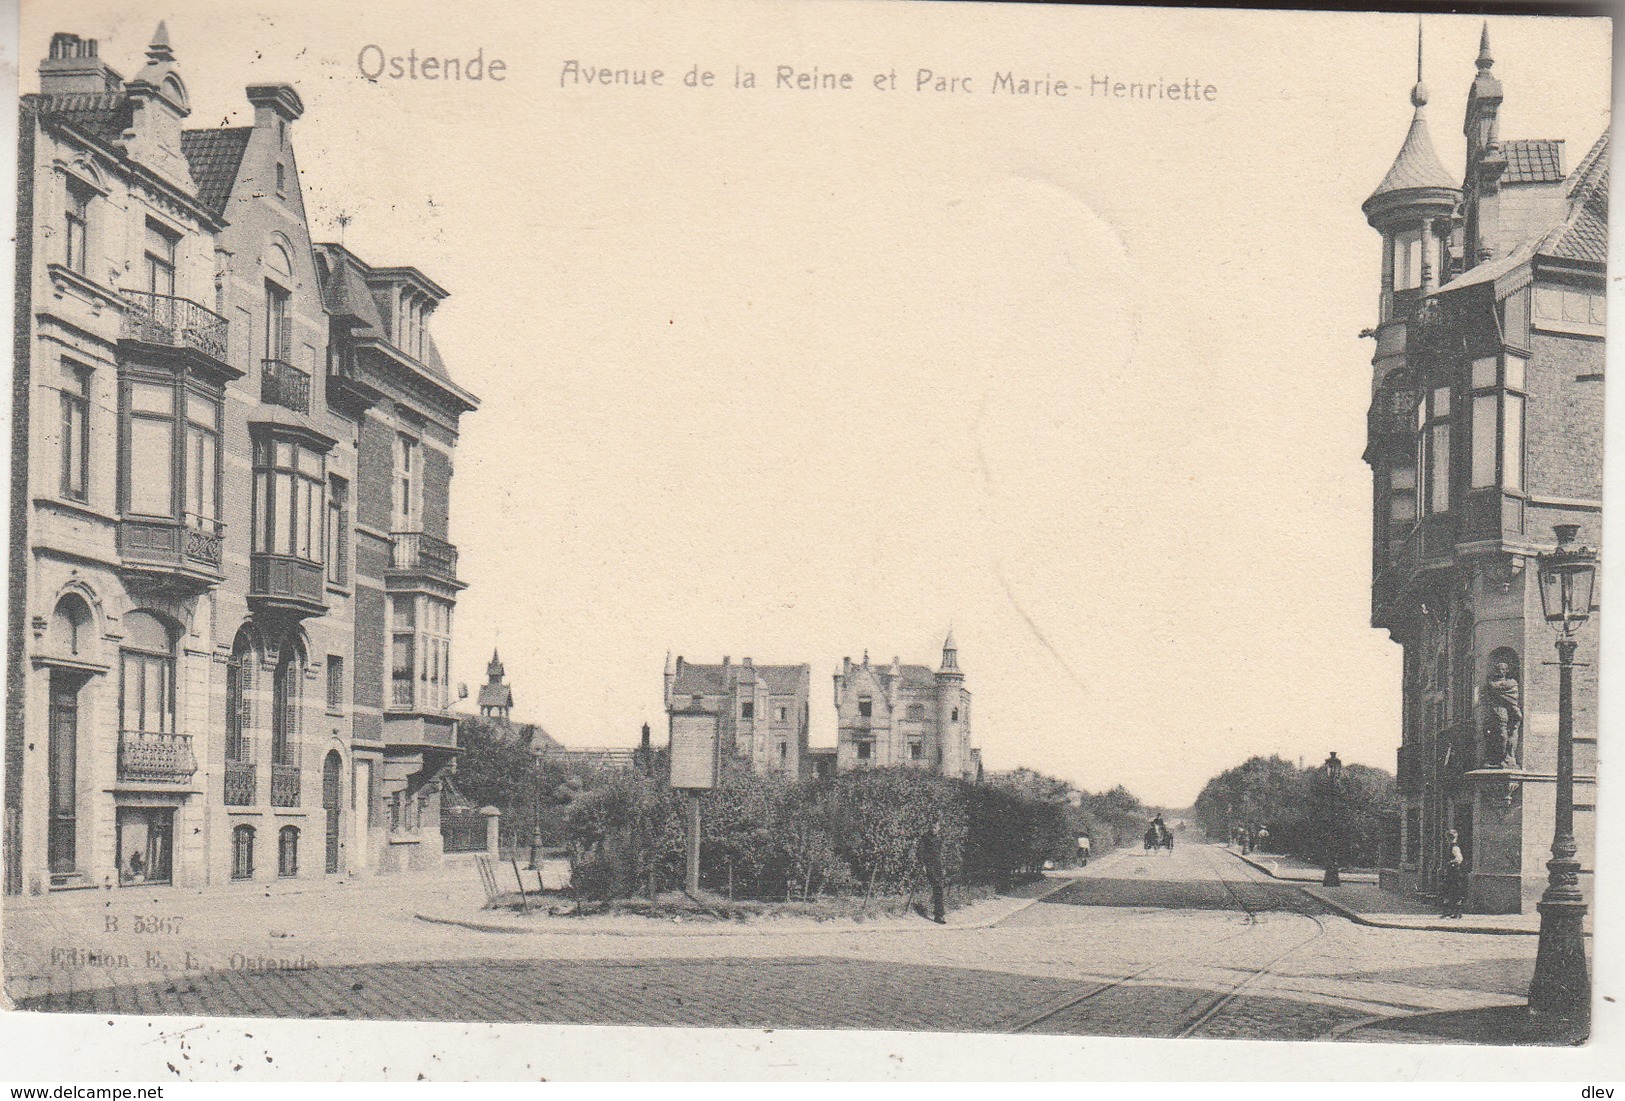 Oostende - Ostende - Avenue De La Reine Et Parc Marie Henriette - 1903 - Uitg. E.L. Oostende - Oostende